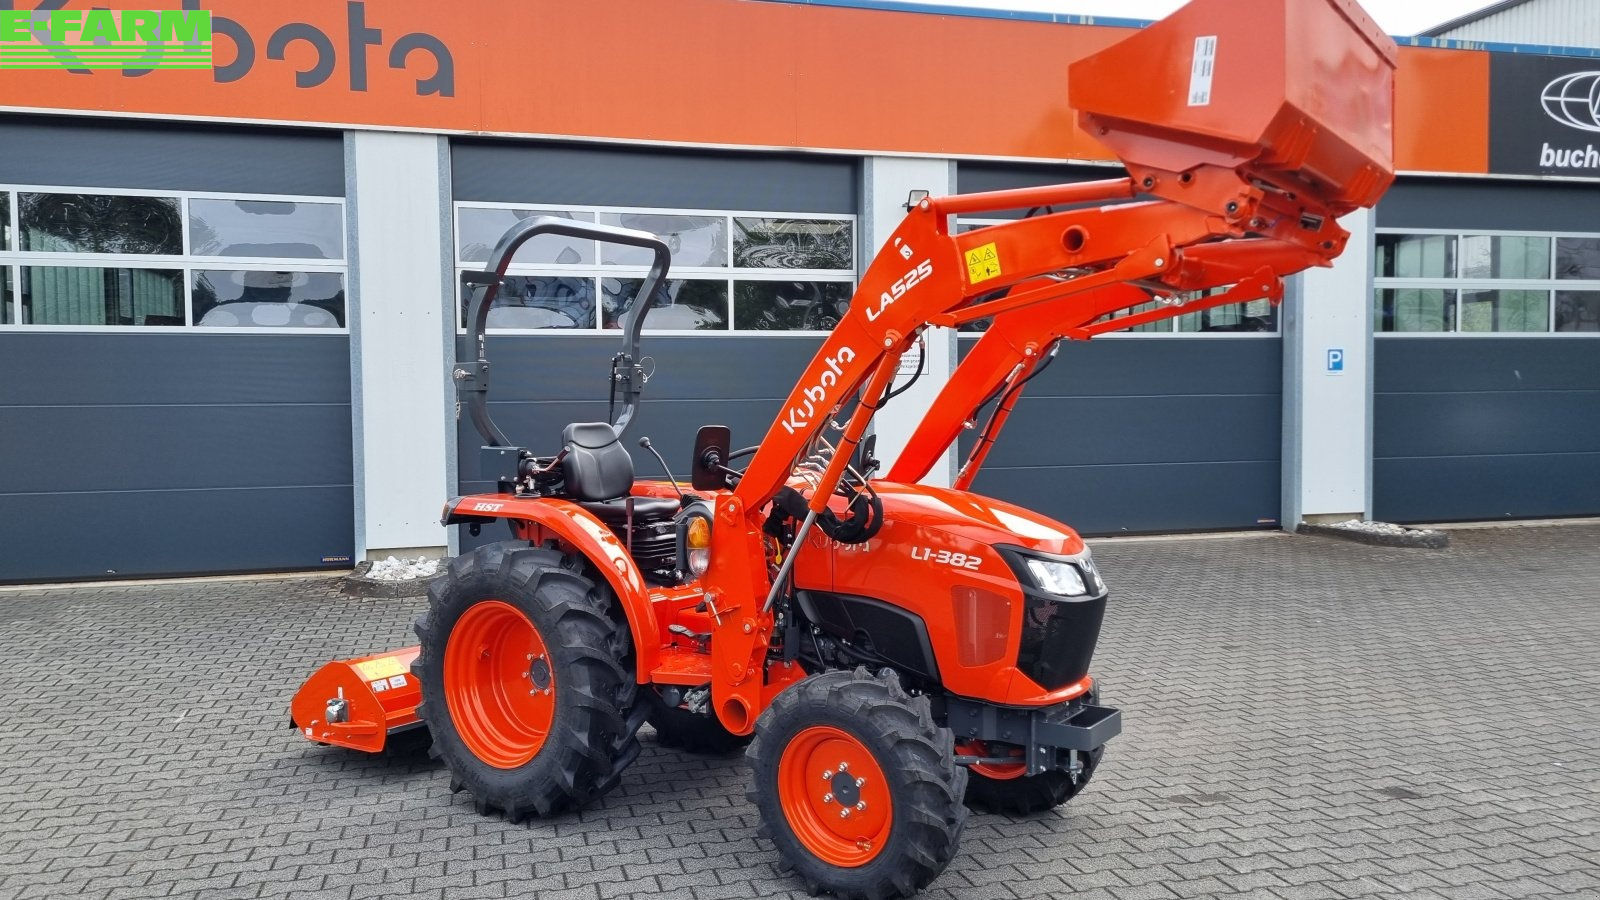 Kubota L1-382 tractor €26,800